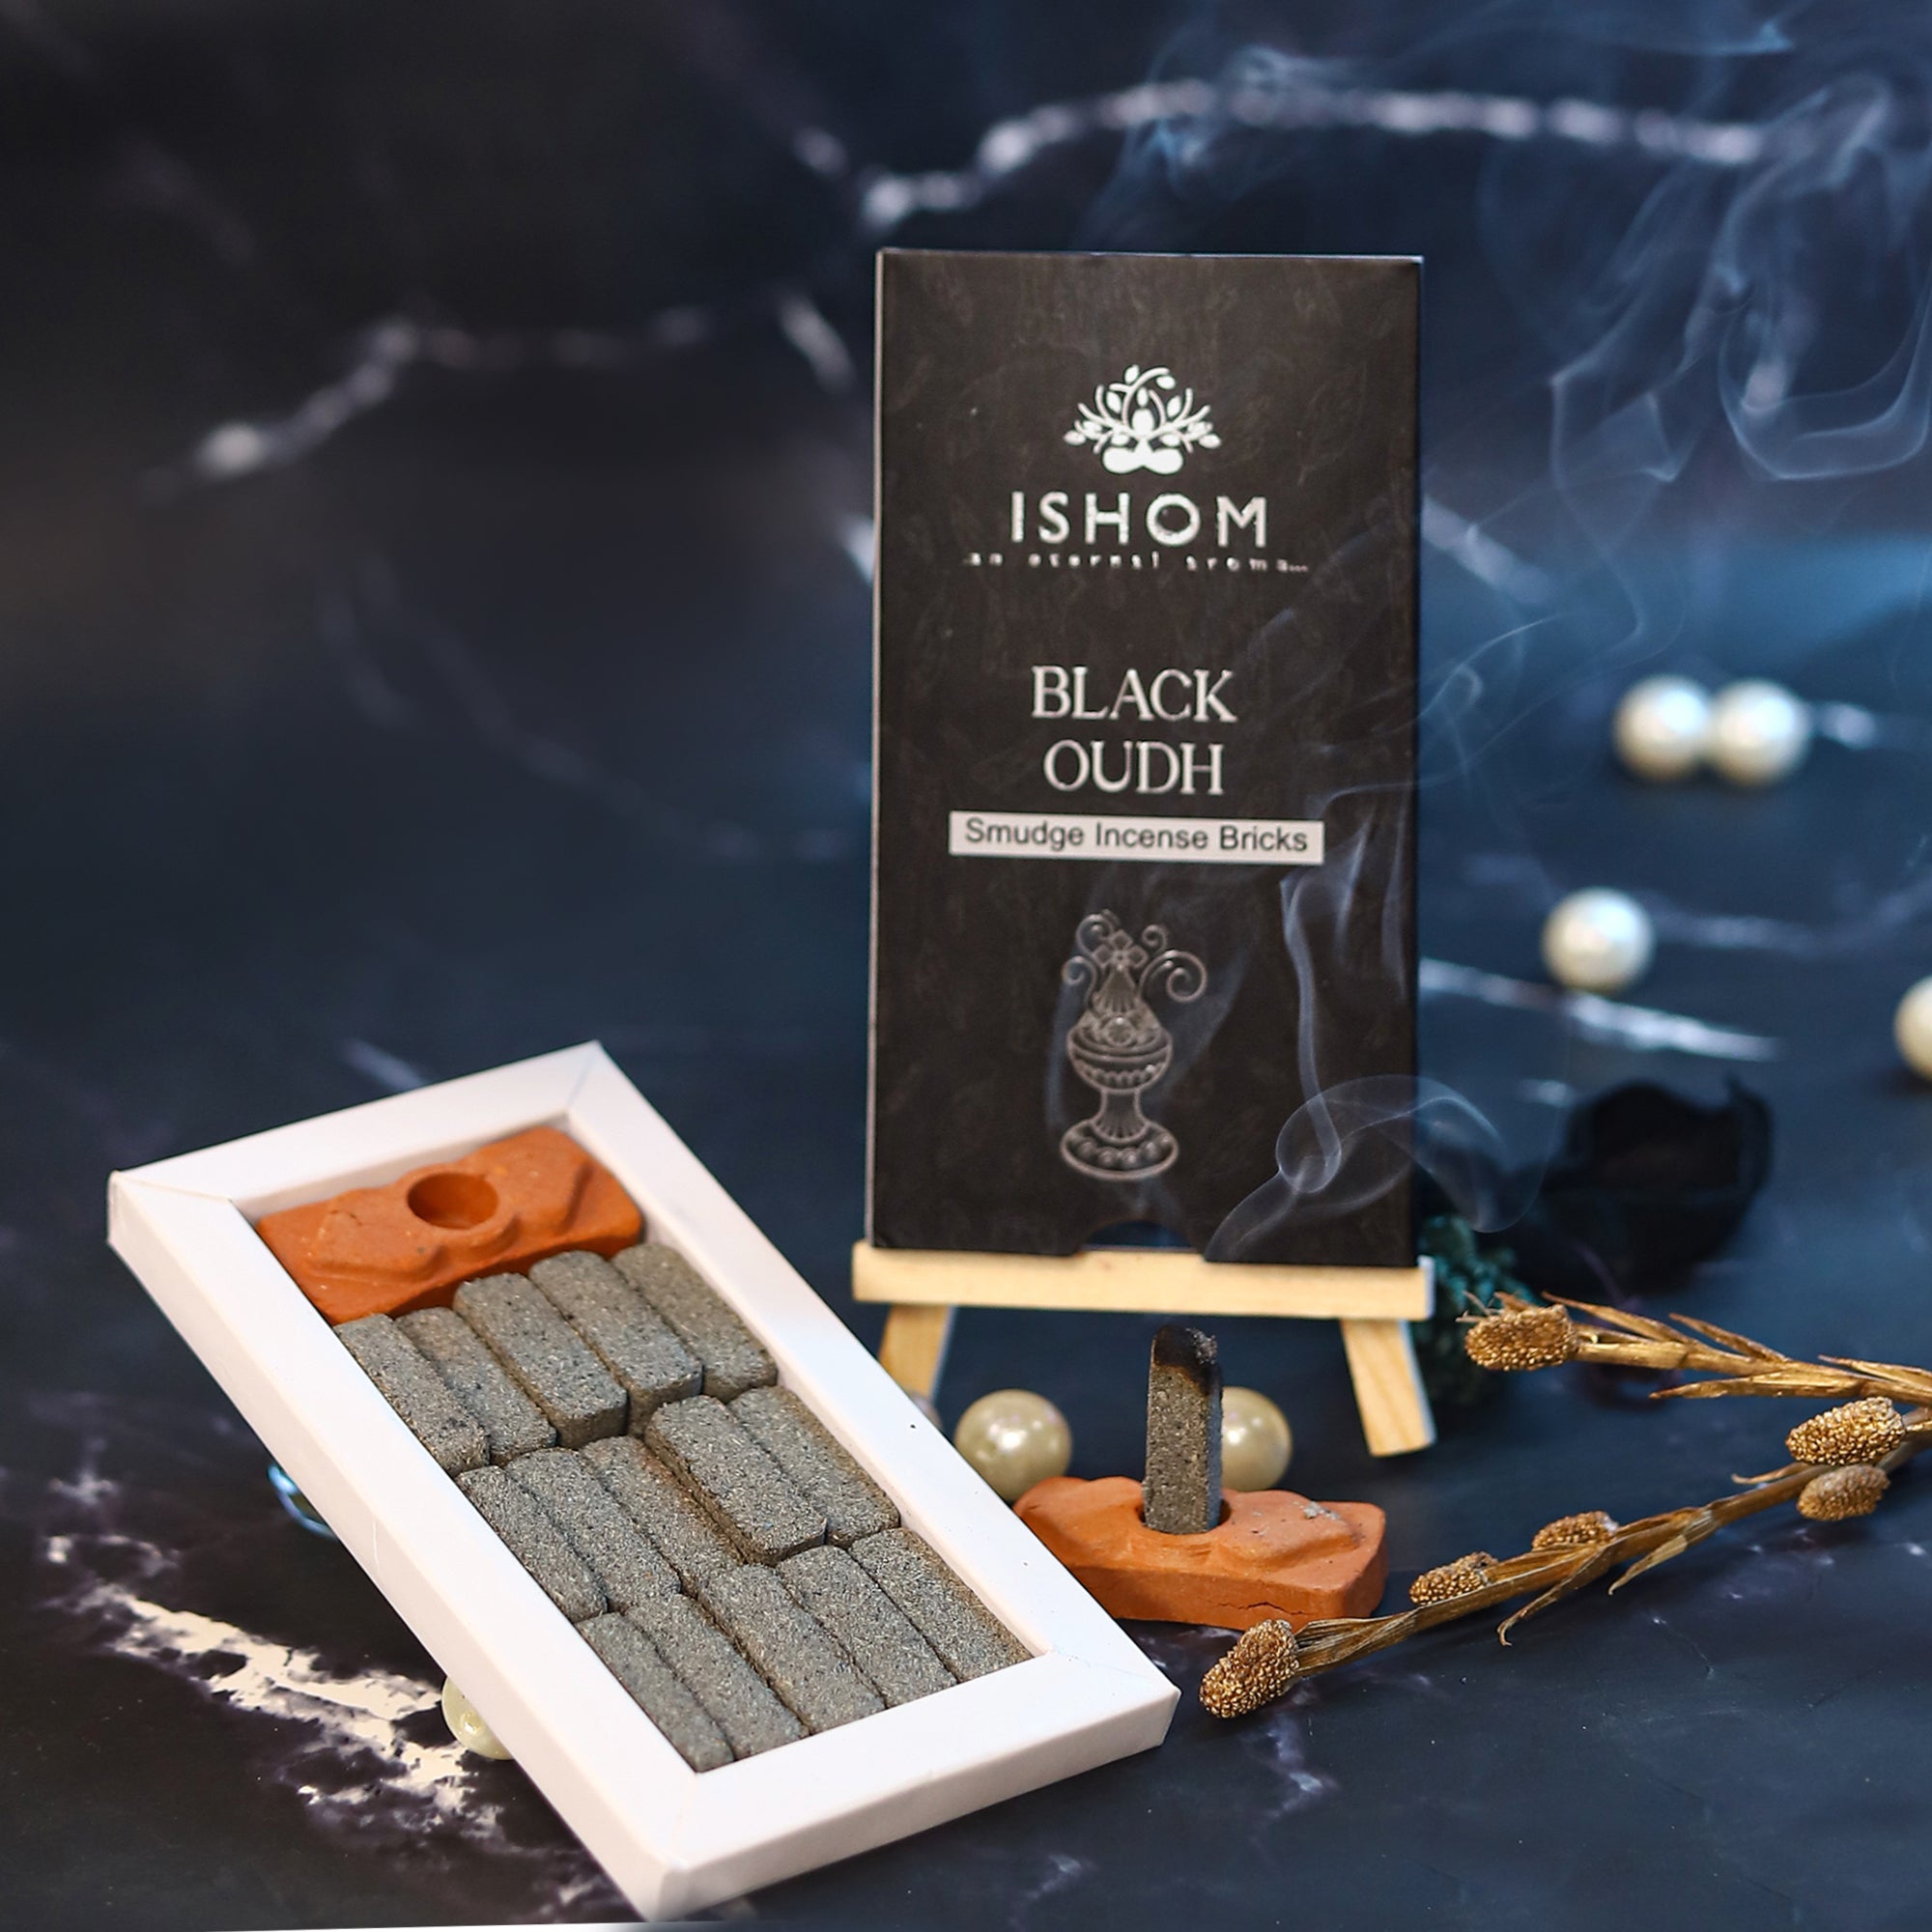 Black oudh  smudge incense bricks